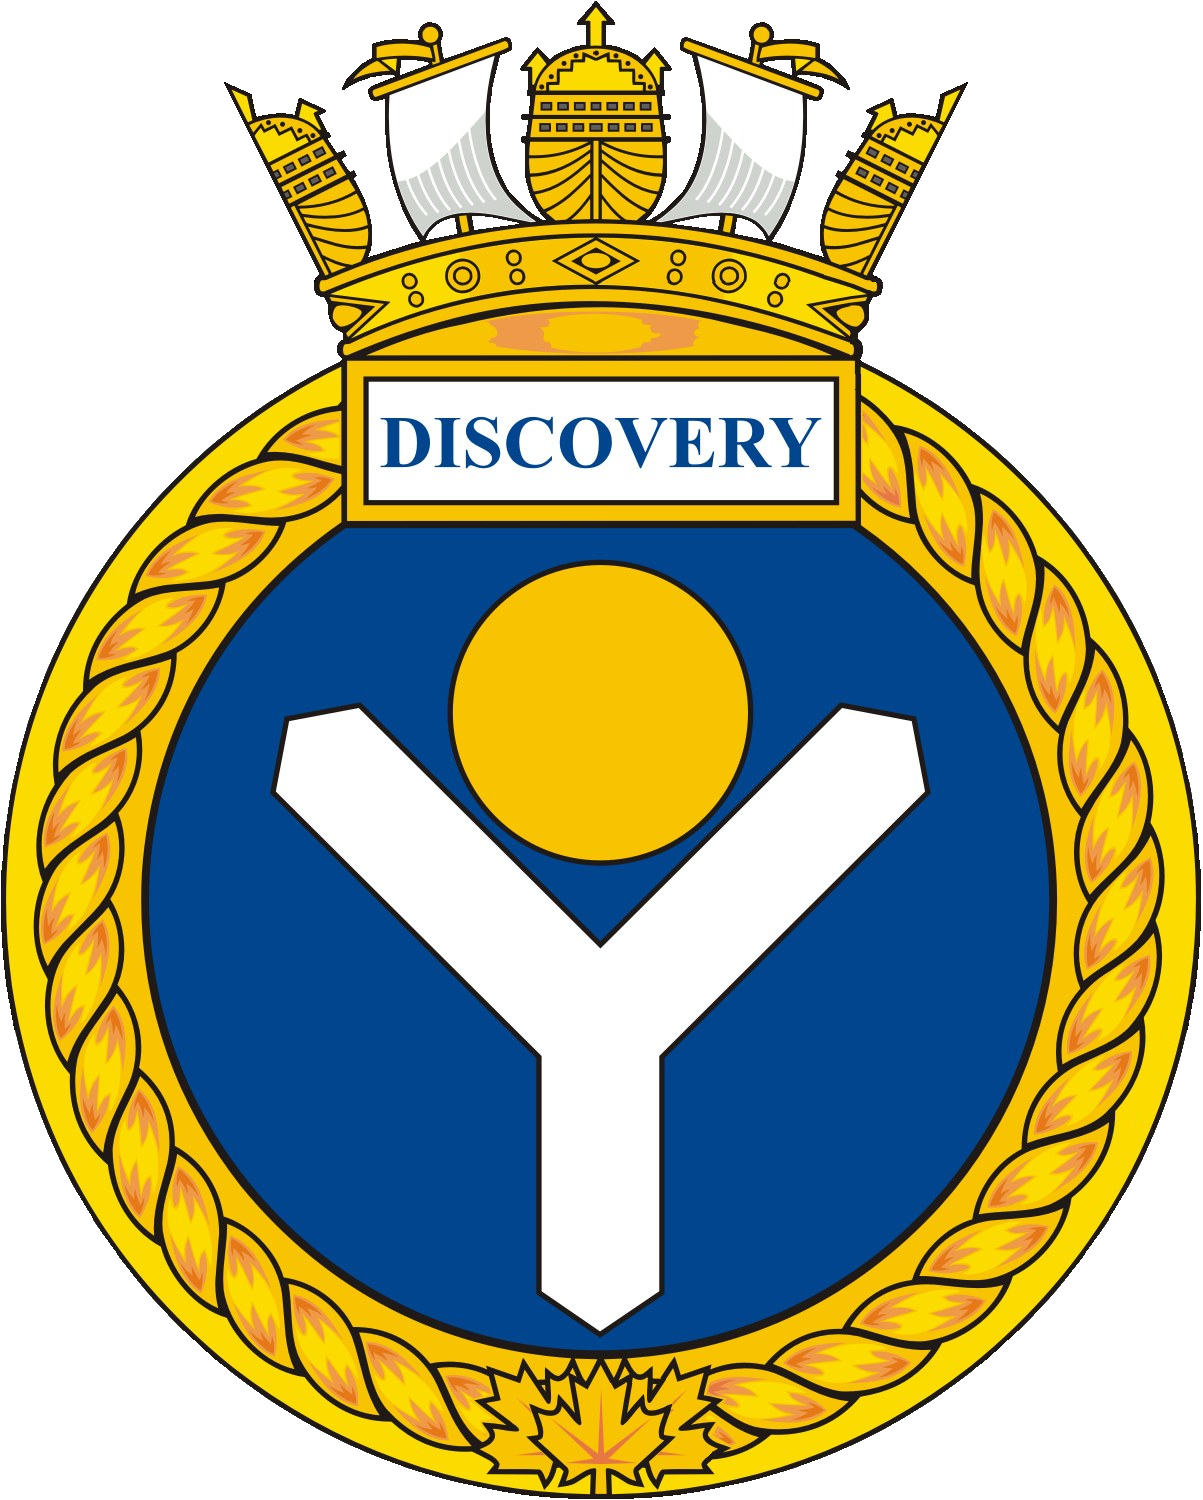 HMCS Discovery - Royal Canadian Navy